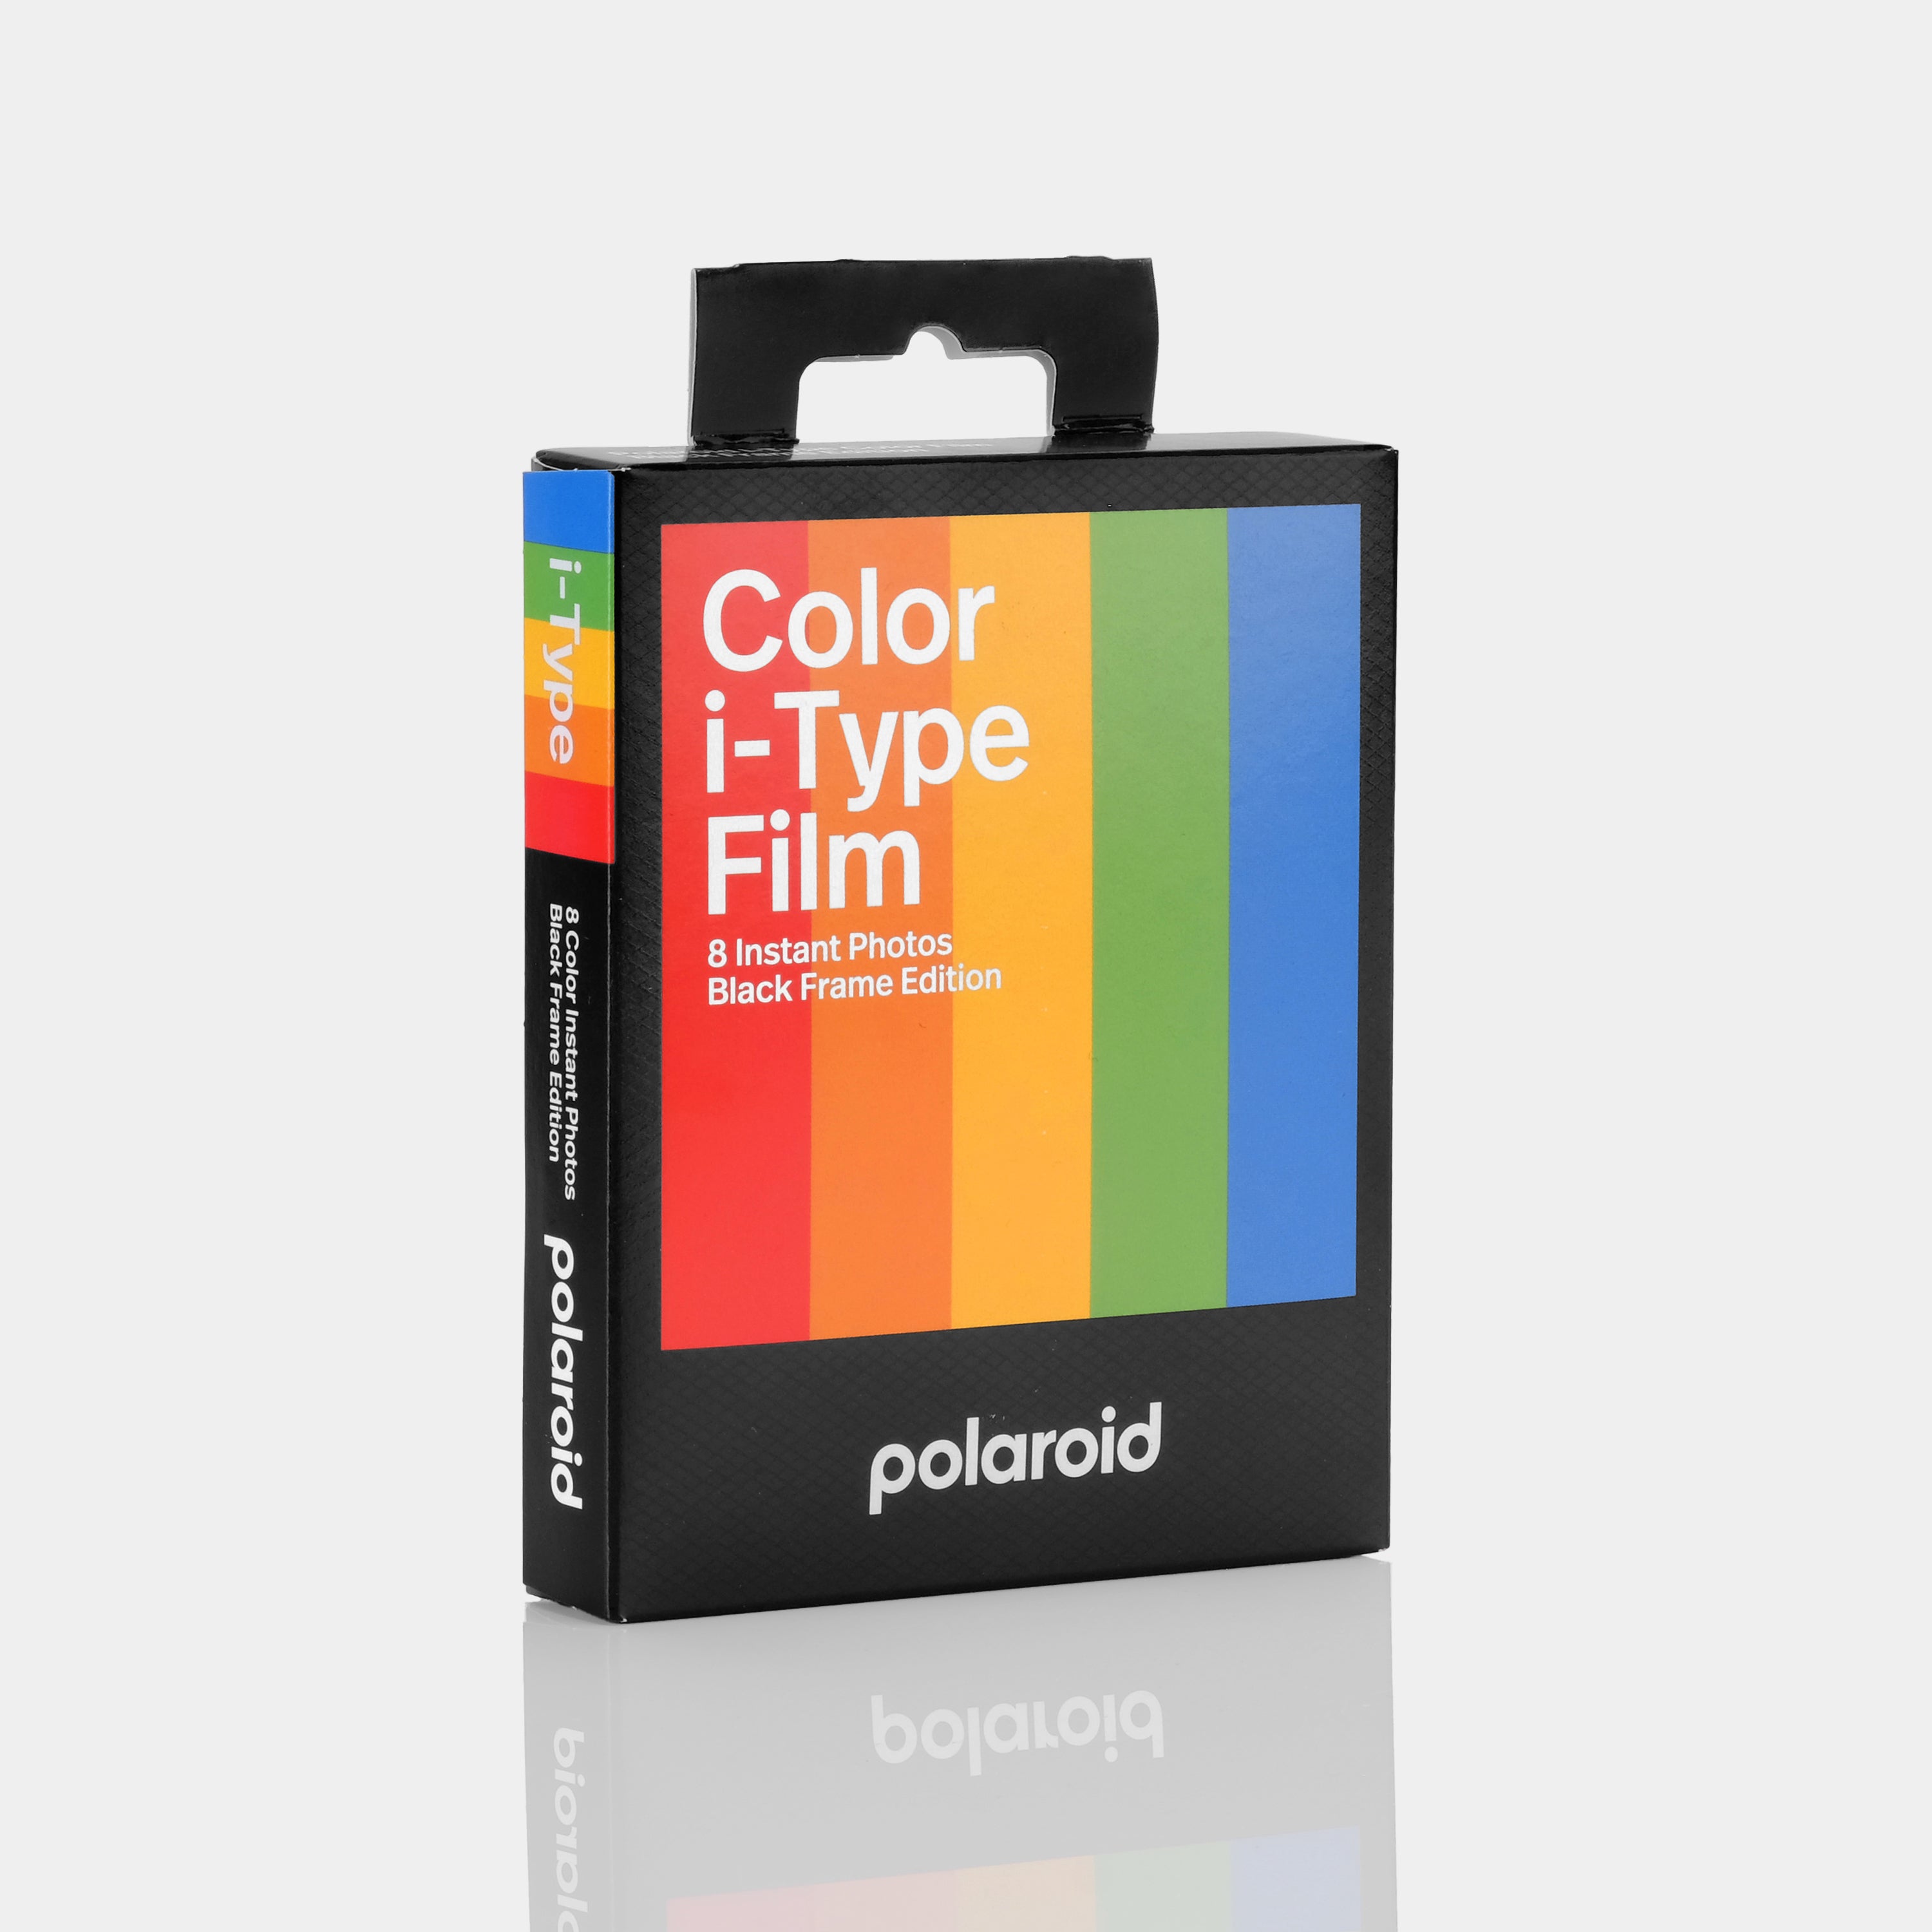 Polaroid Film Couleur 600